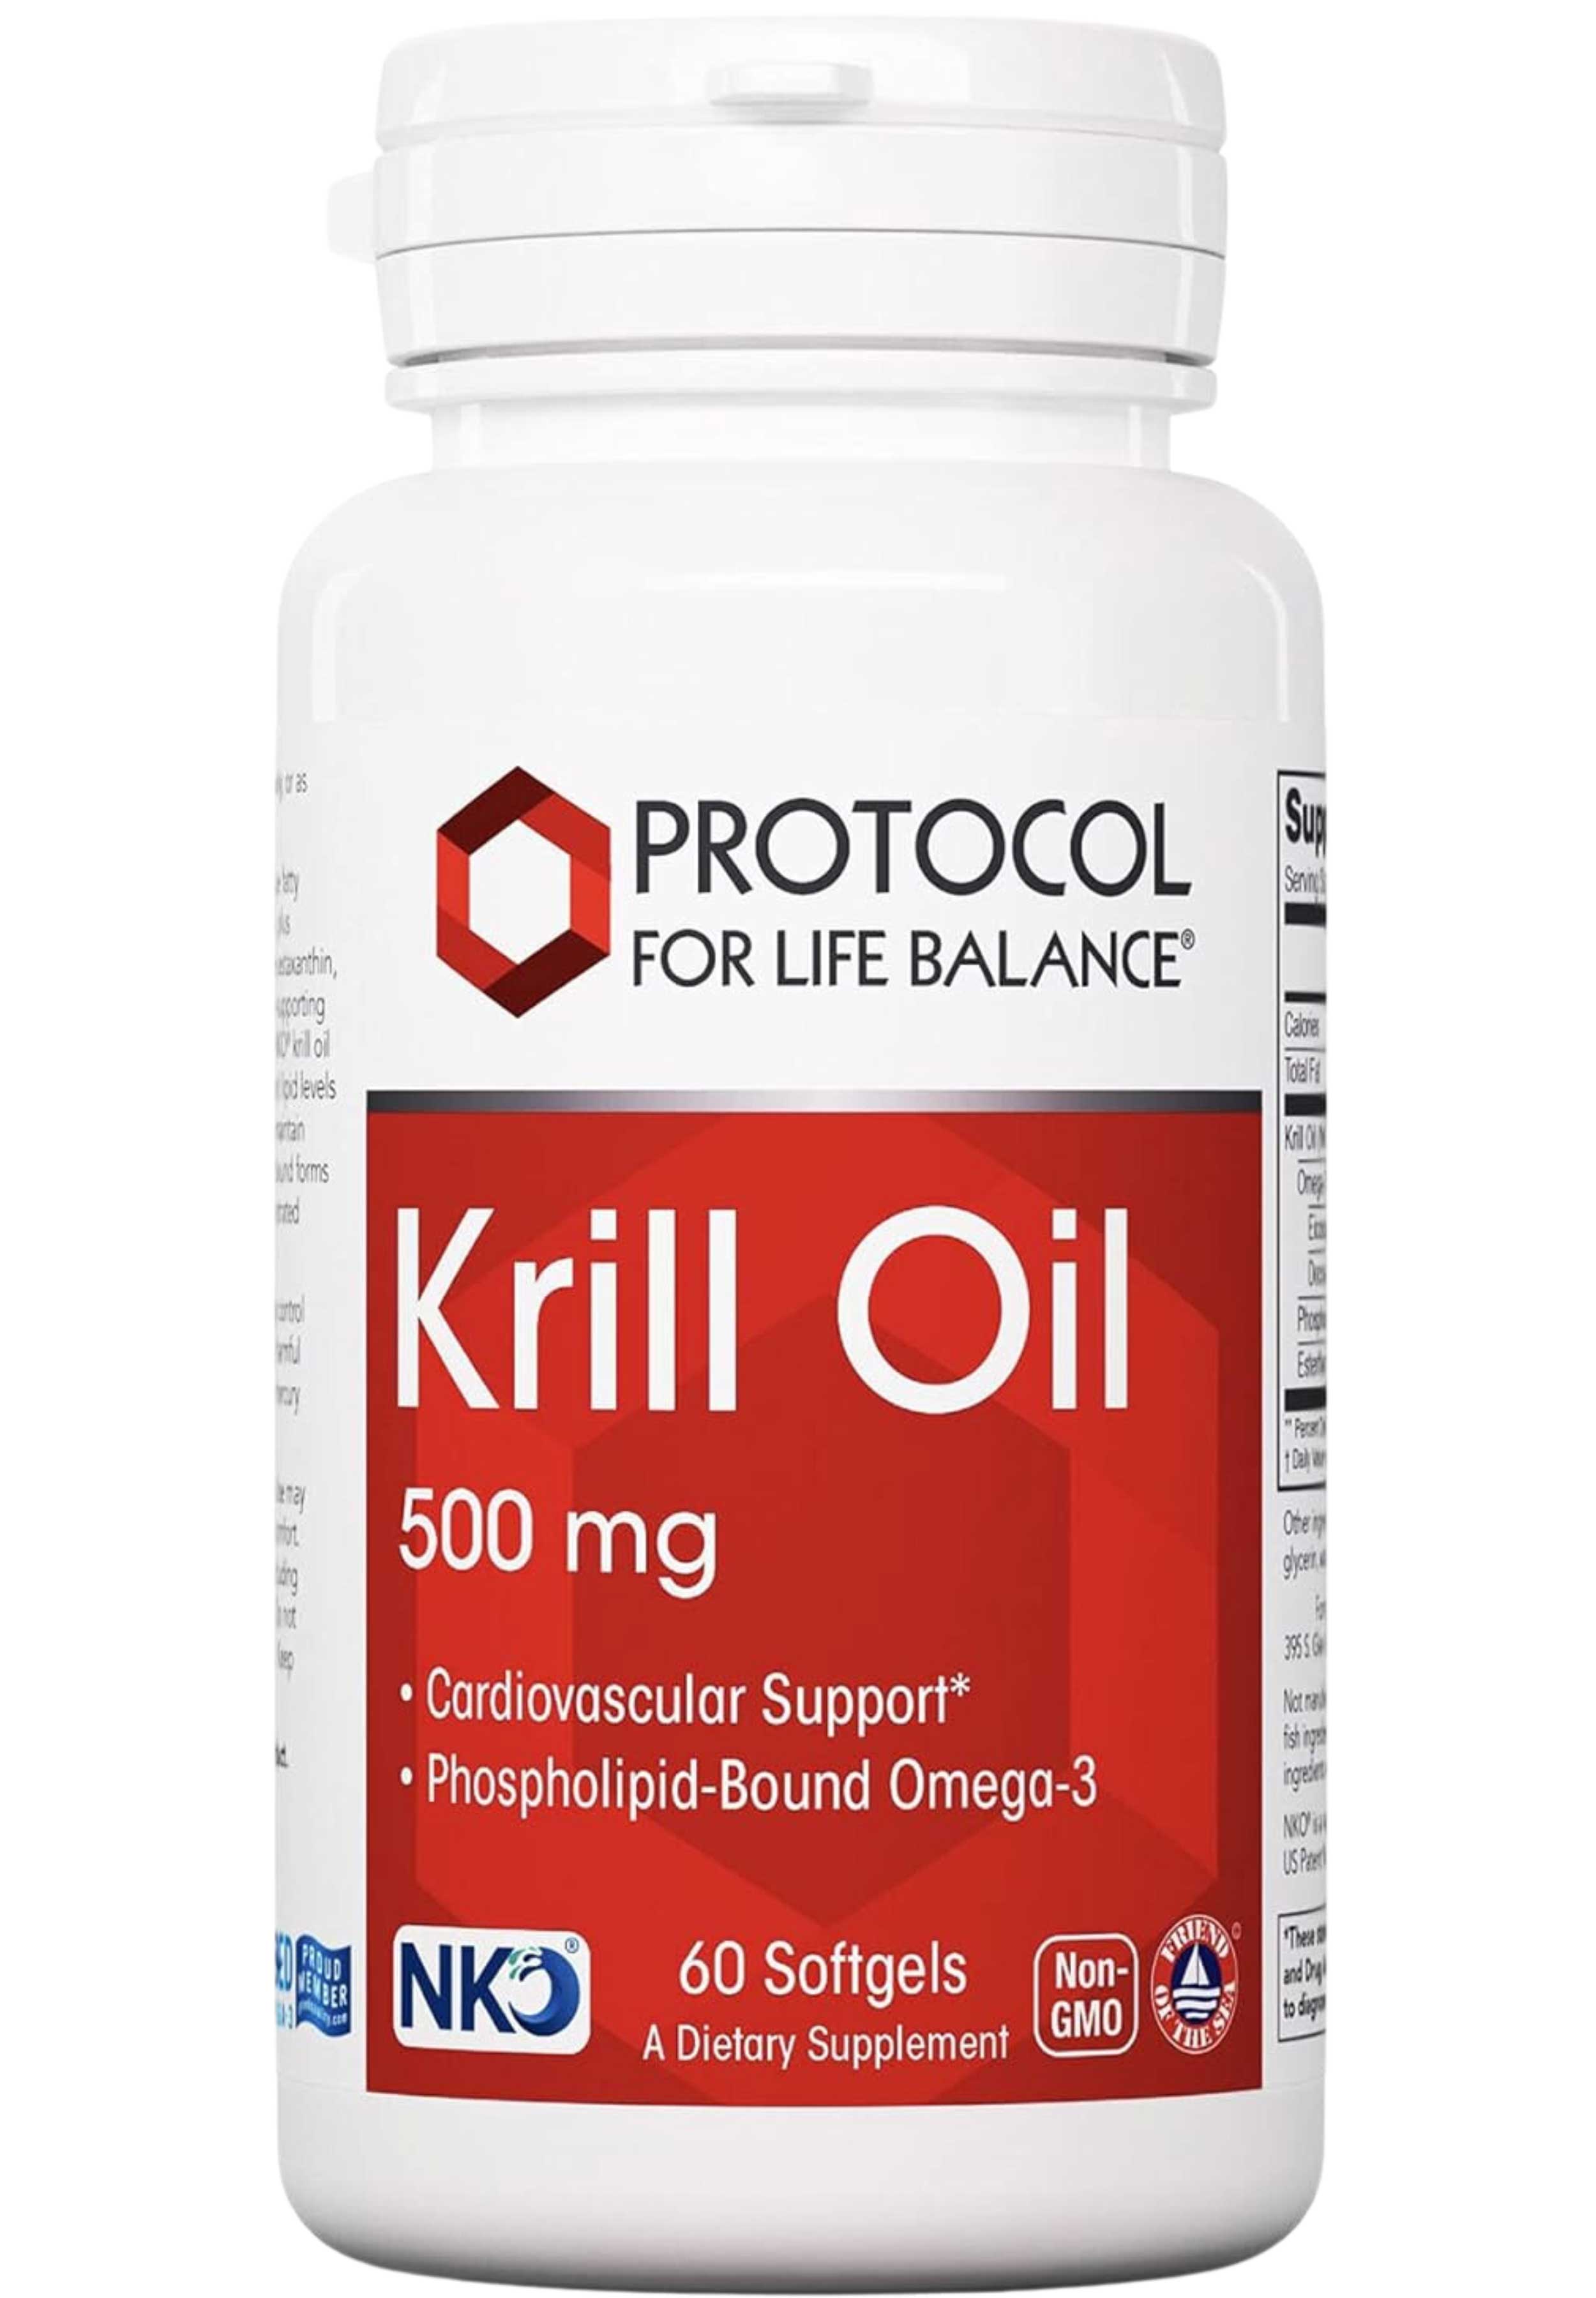 Protocol for Life Balance Neptune Krill Oil 500mg